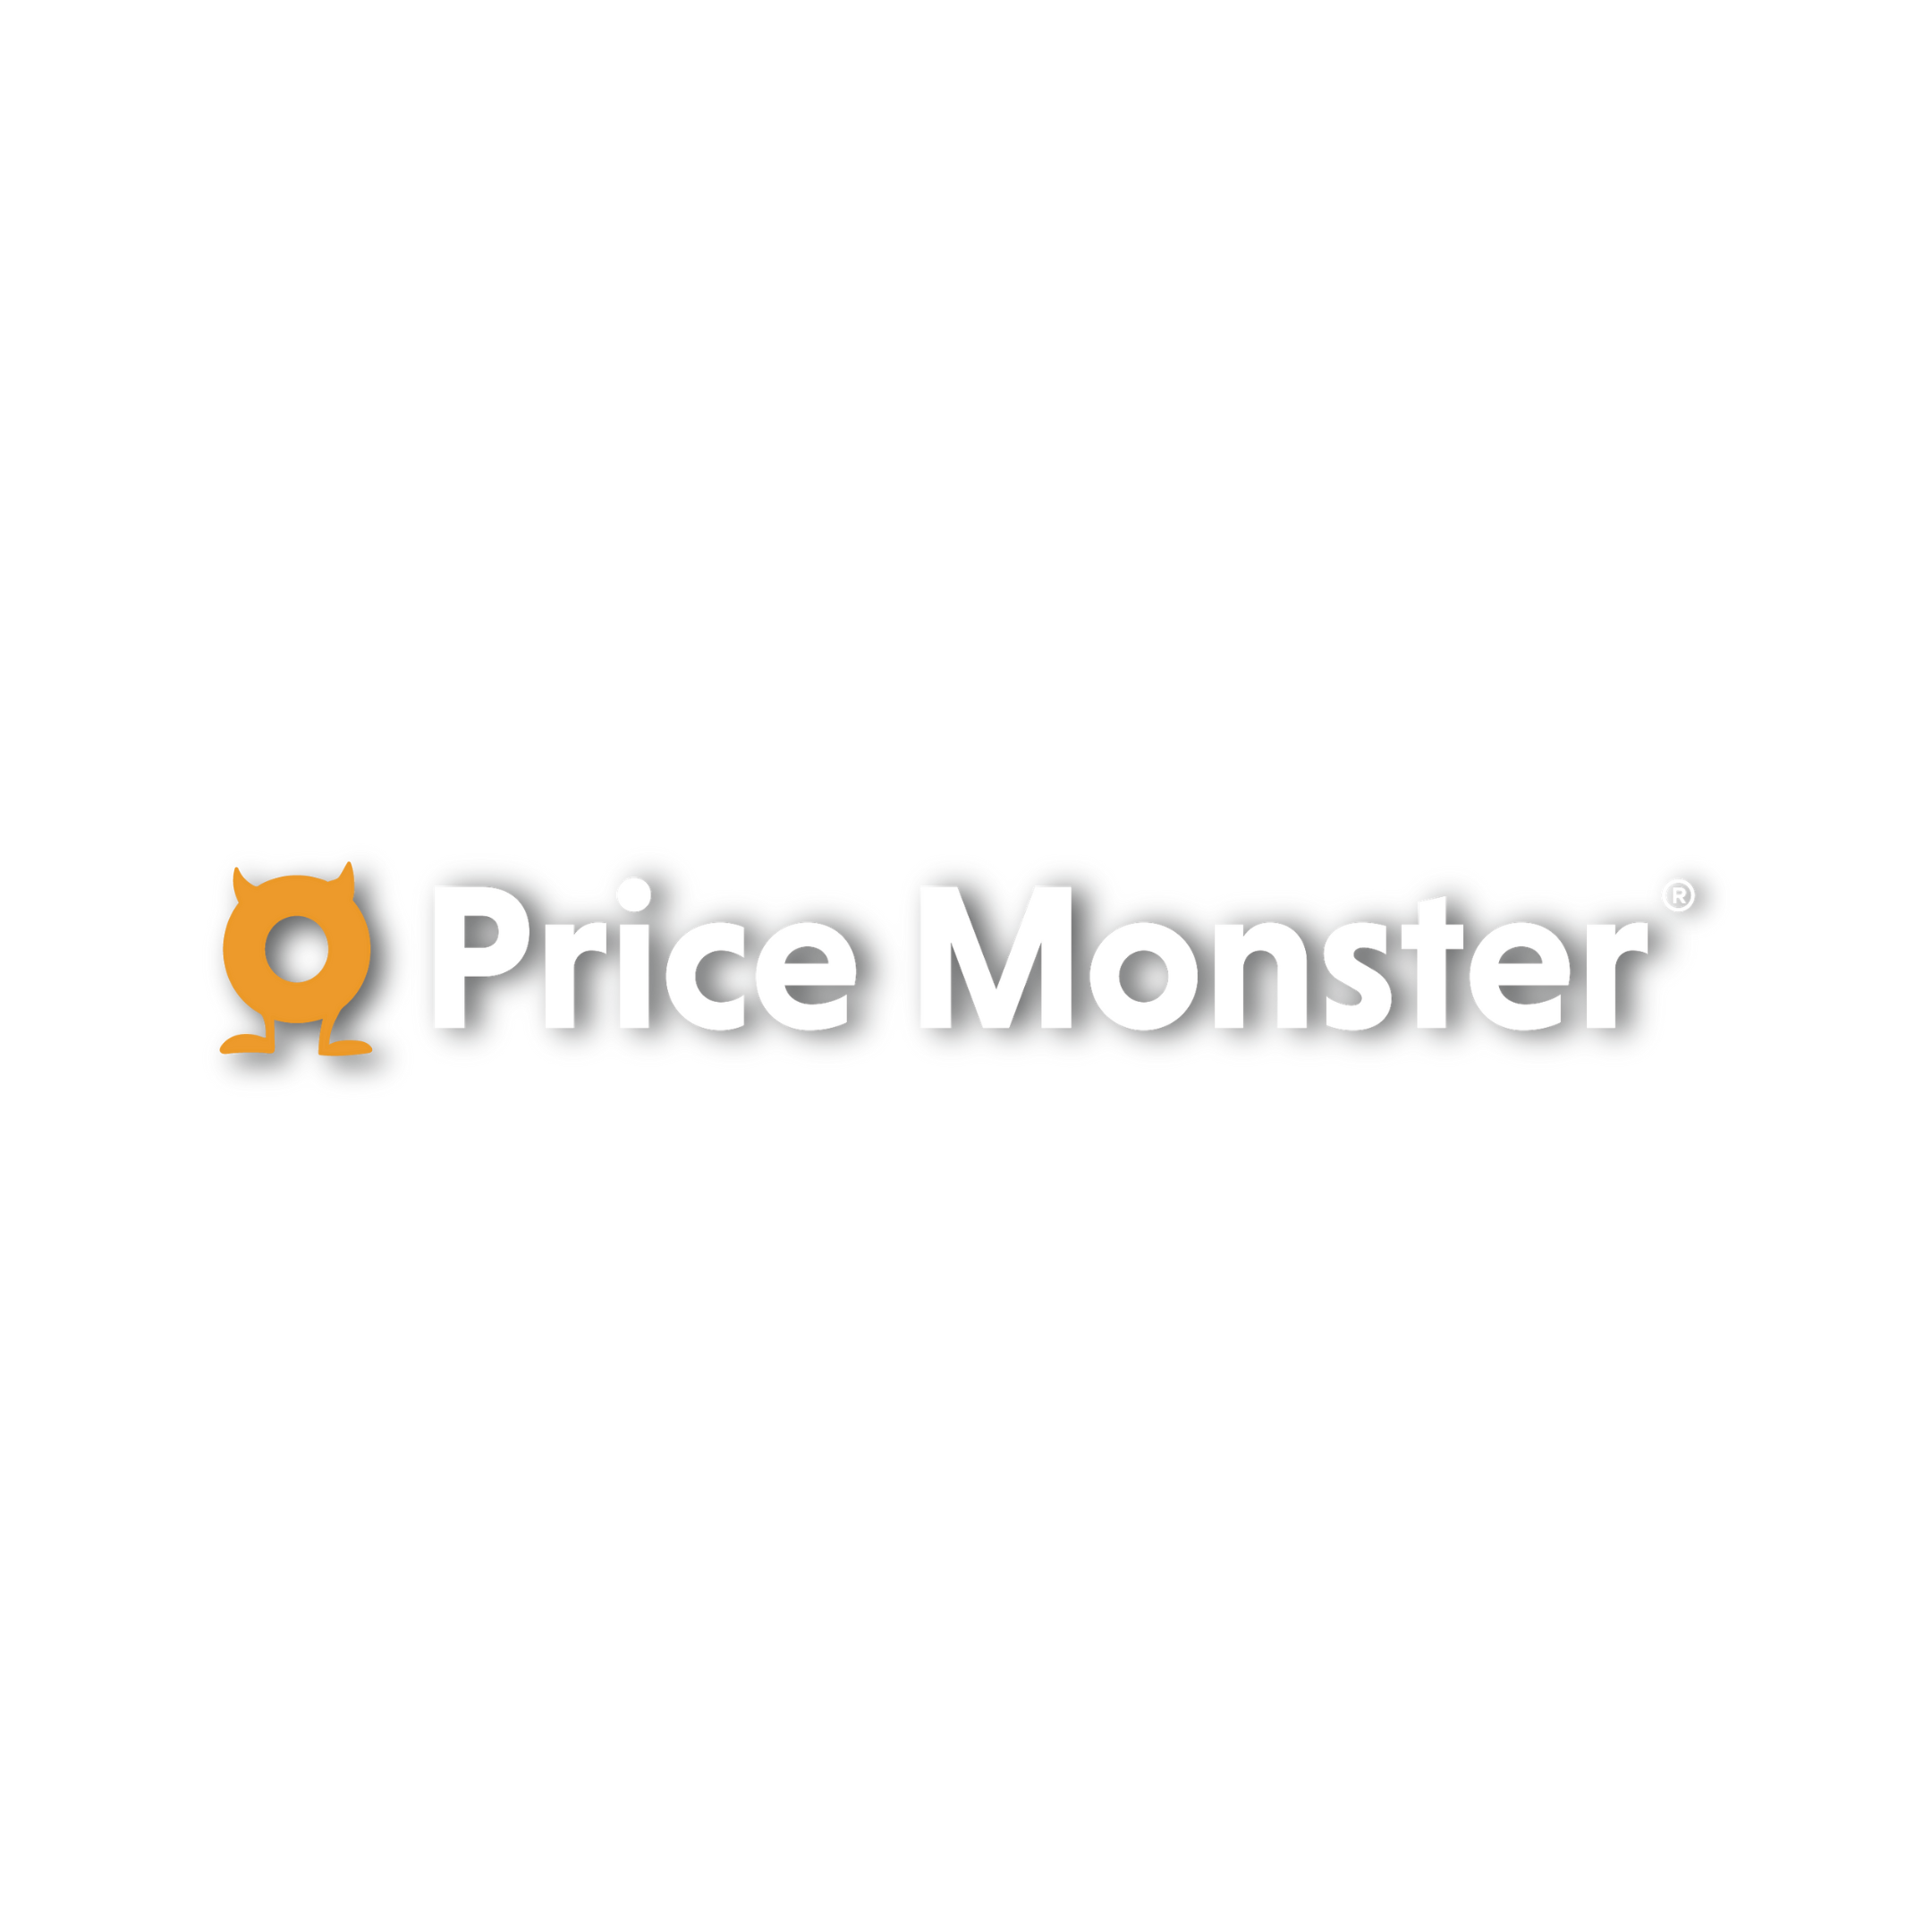 Price Monster